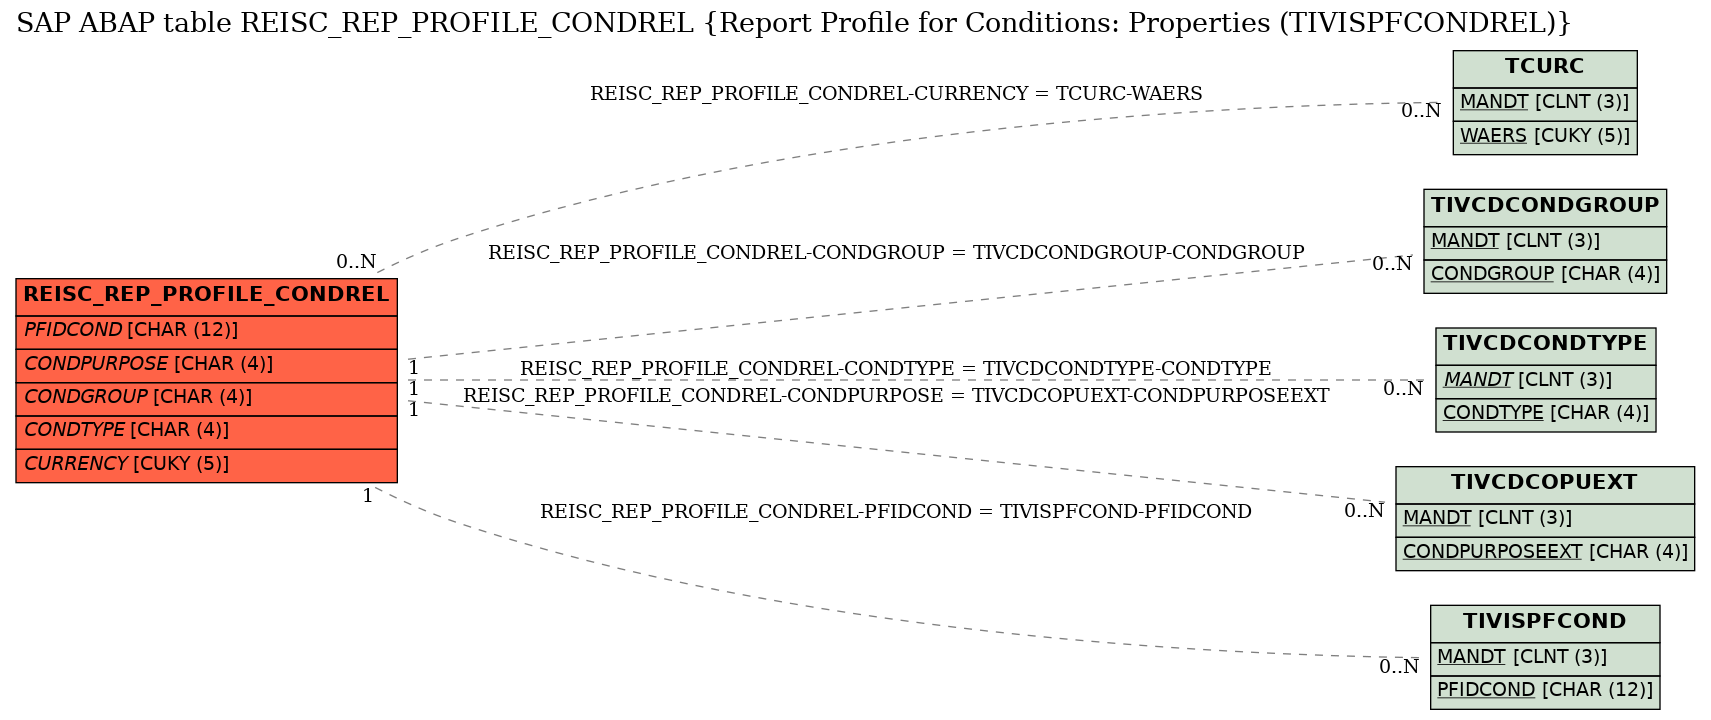 E-R Diagram for table REISC_REP_PROFILE_CONDREL (Report Profile for Conditions: Properties (TIVISPFCONDREL))